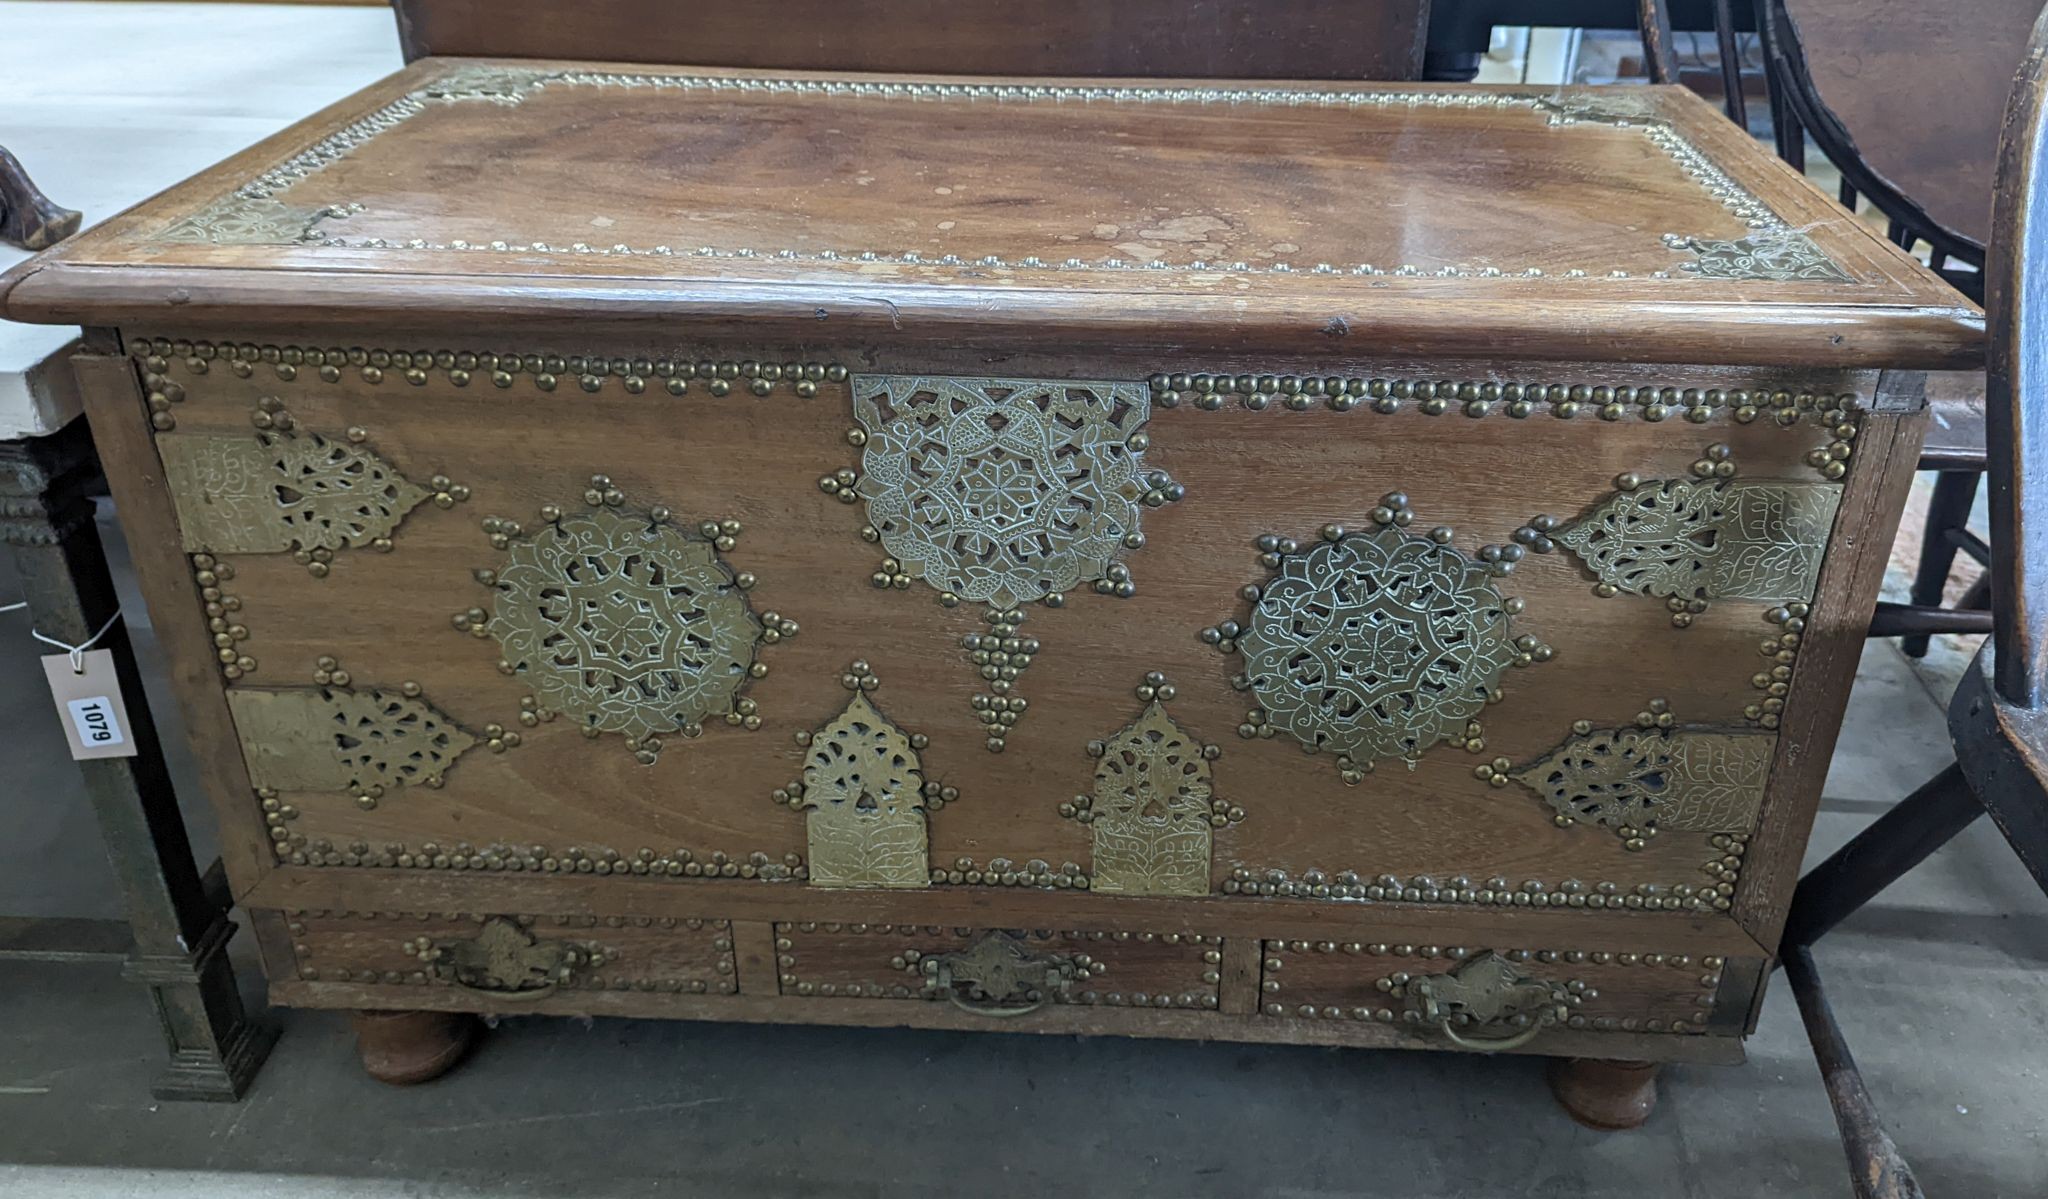 A studded wood hardwood Zanzibar chest, width 96cm, depth 48cm, height 60cm